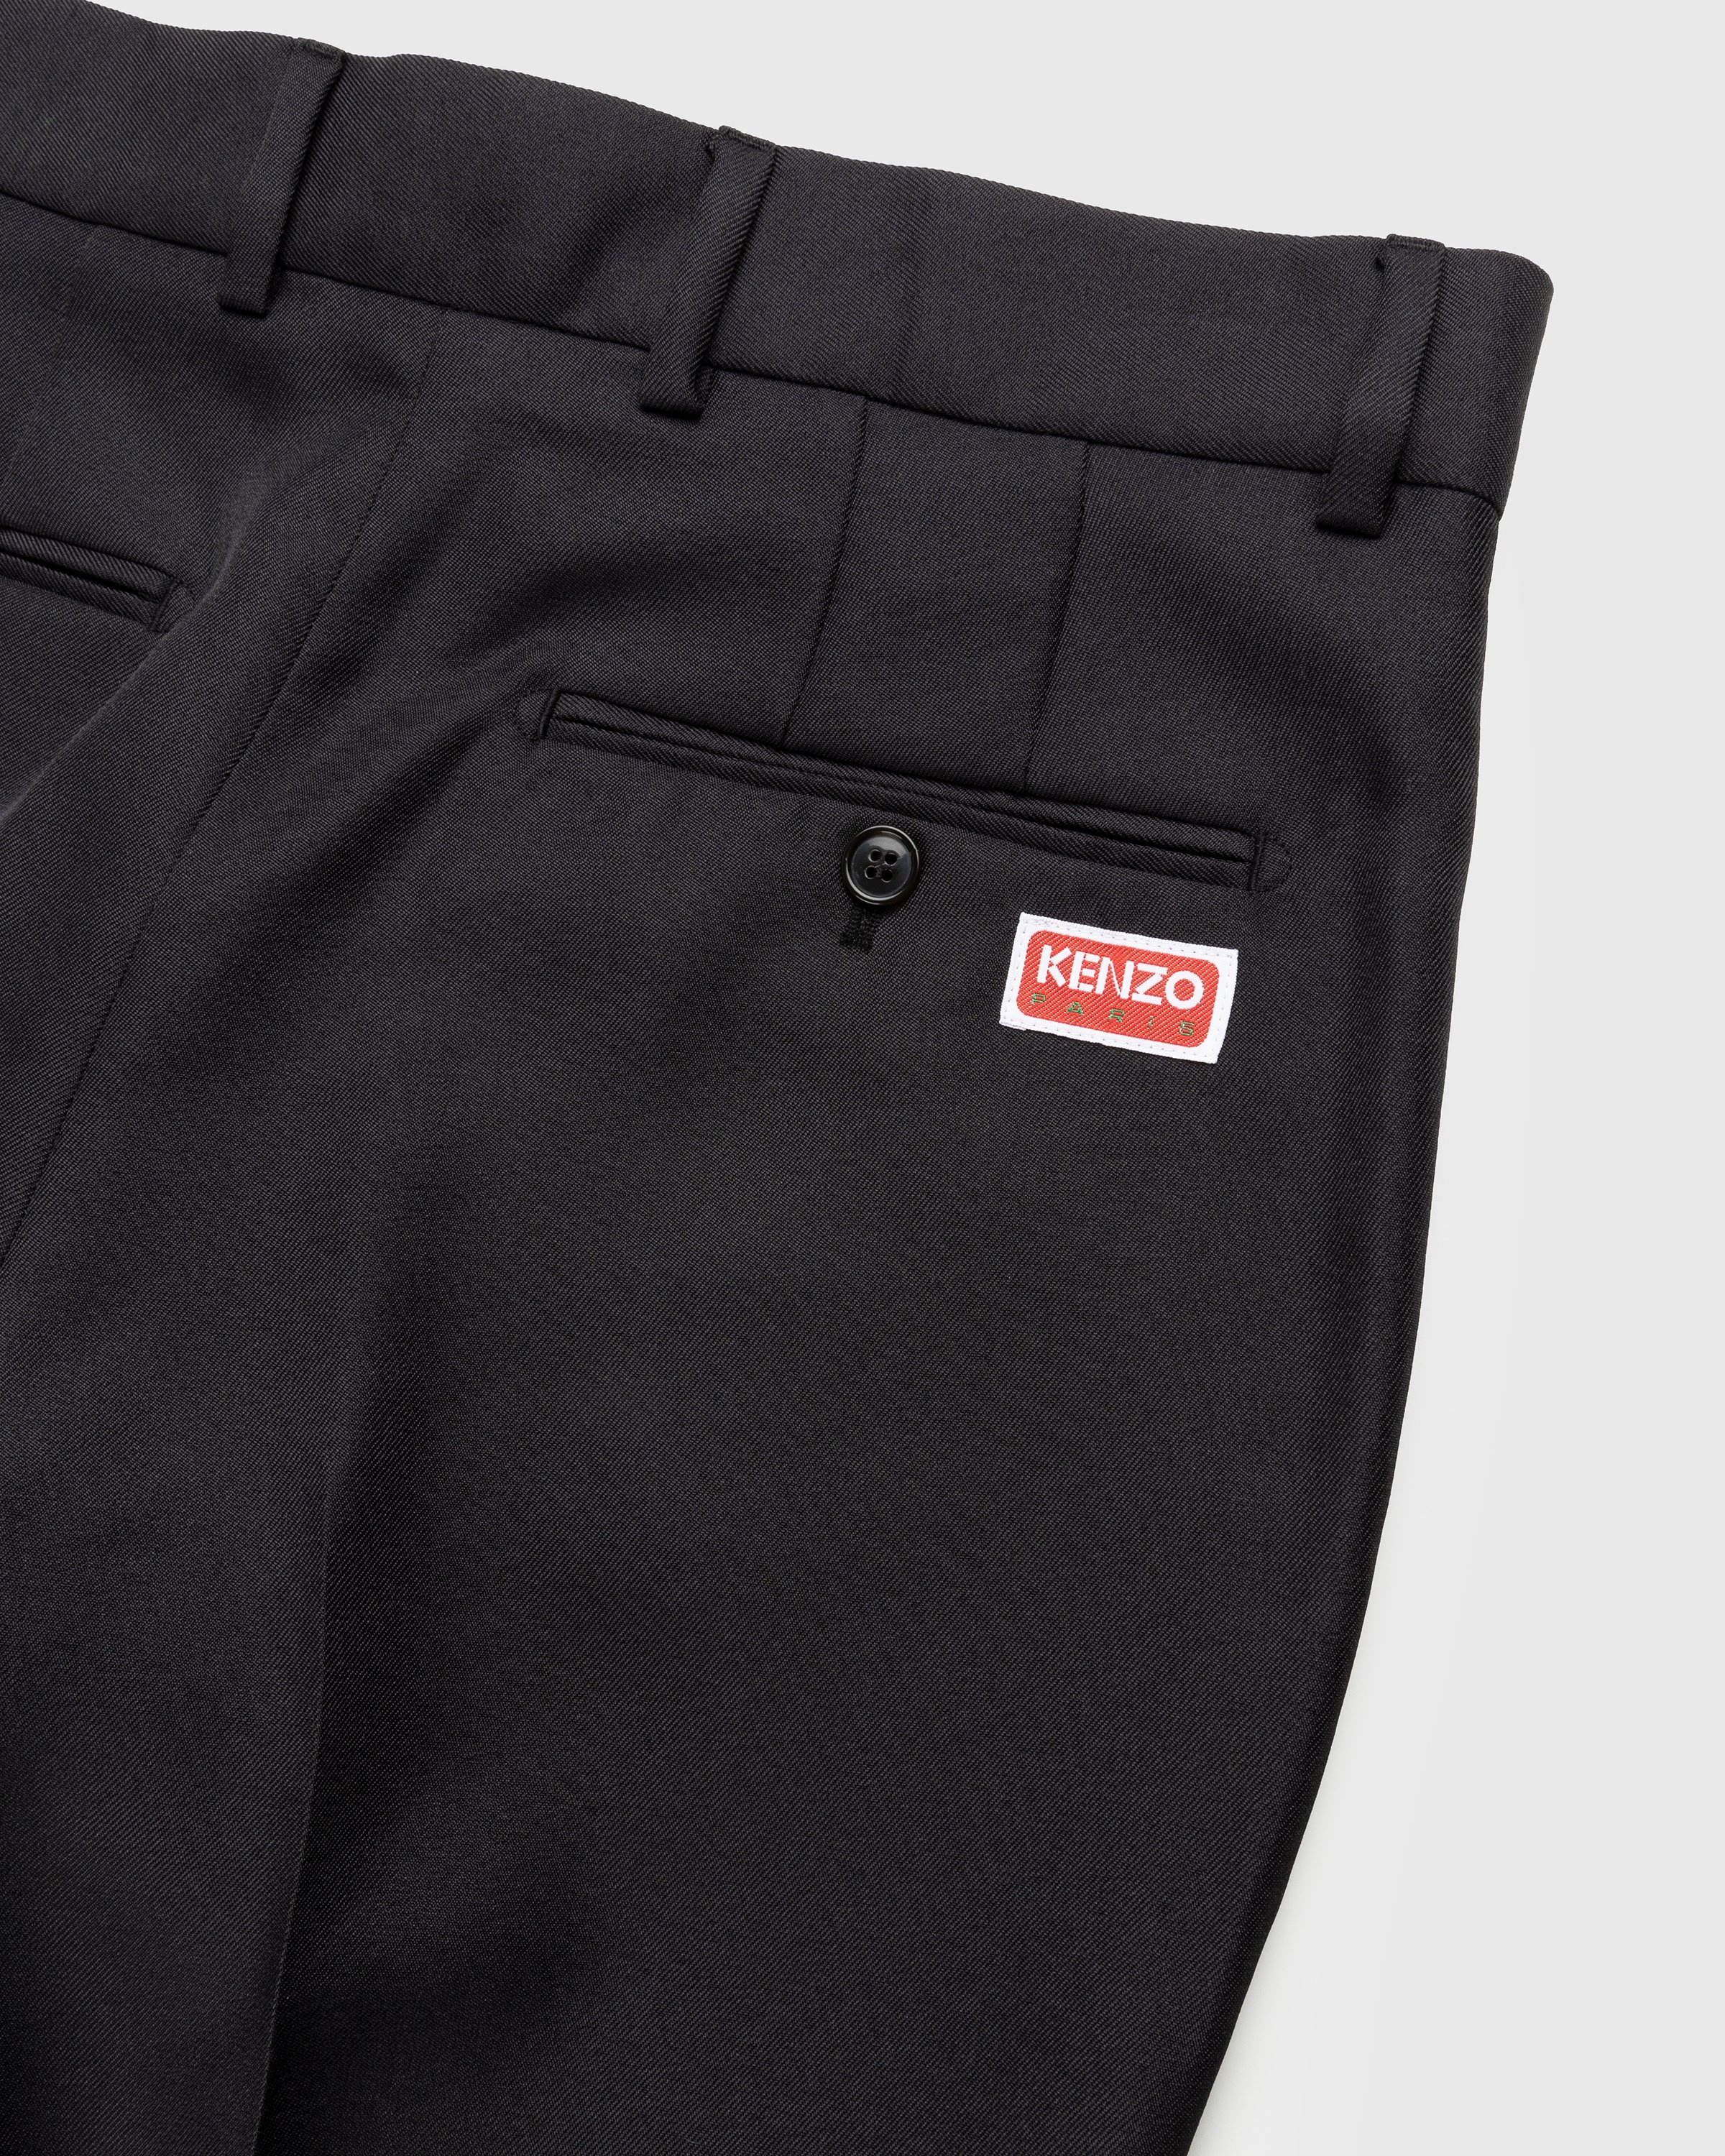 Kenzo – Slim-Fit Trousers Black - Trousers - Black - Image 4